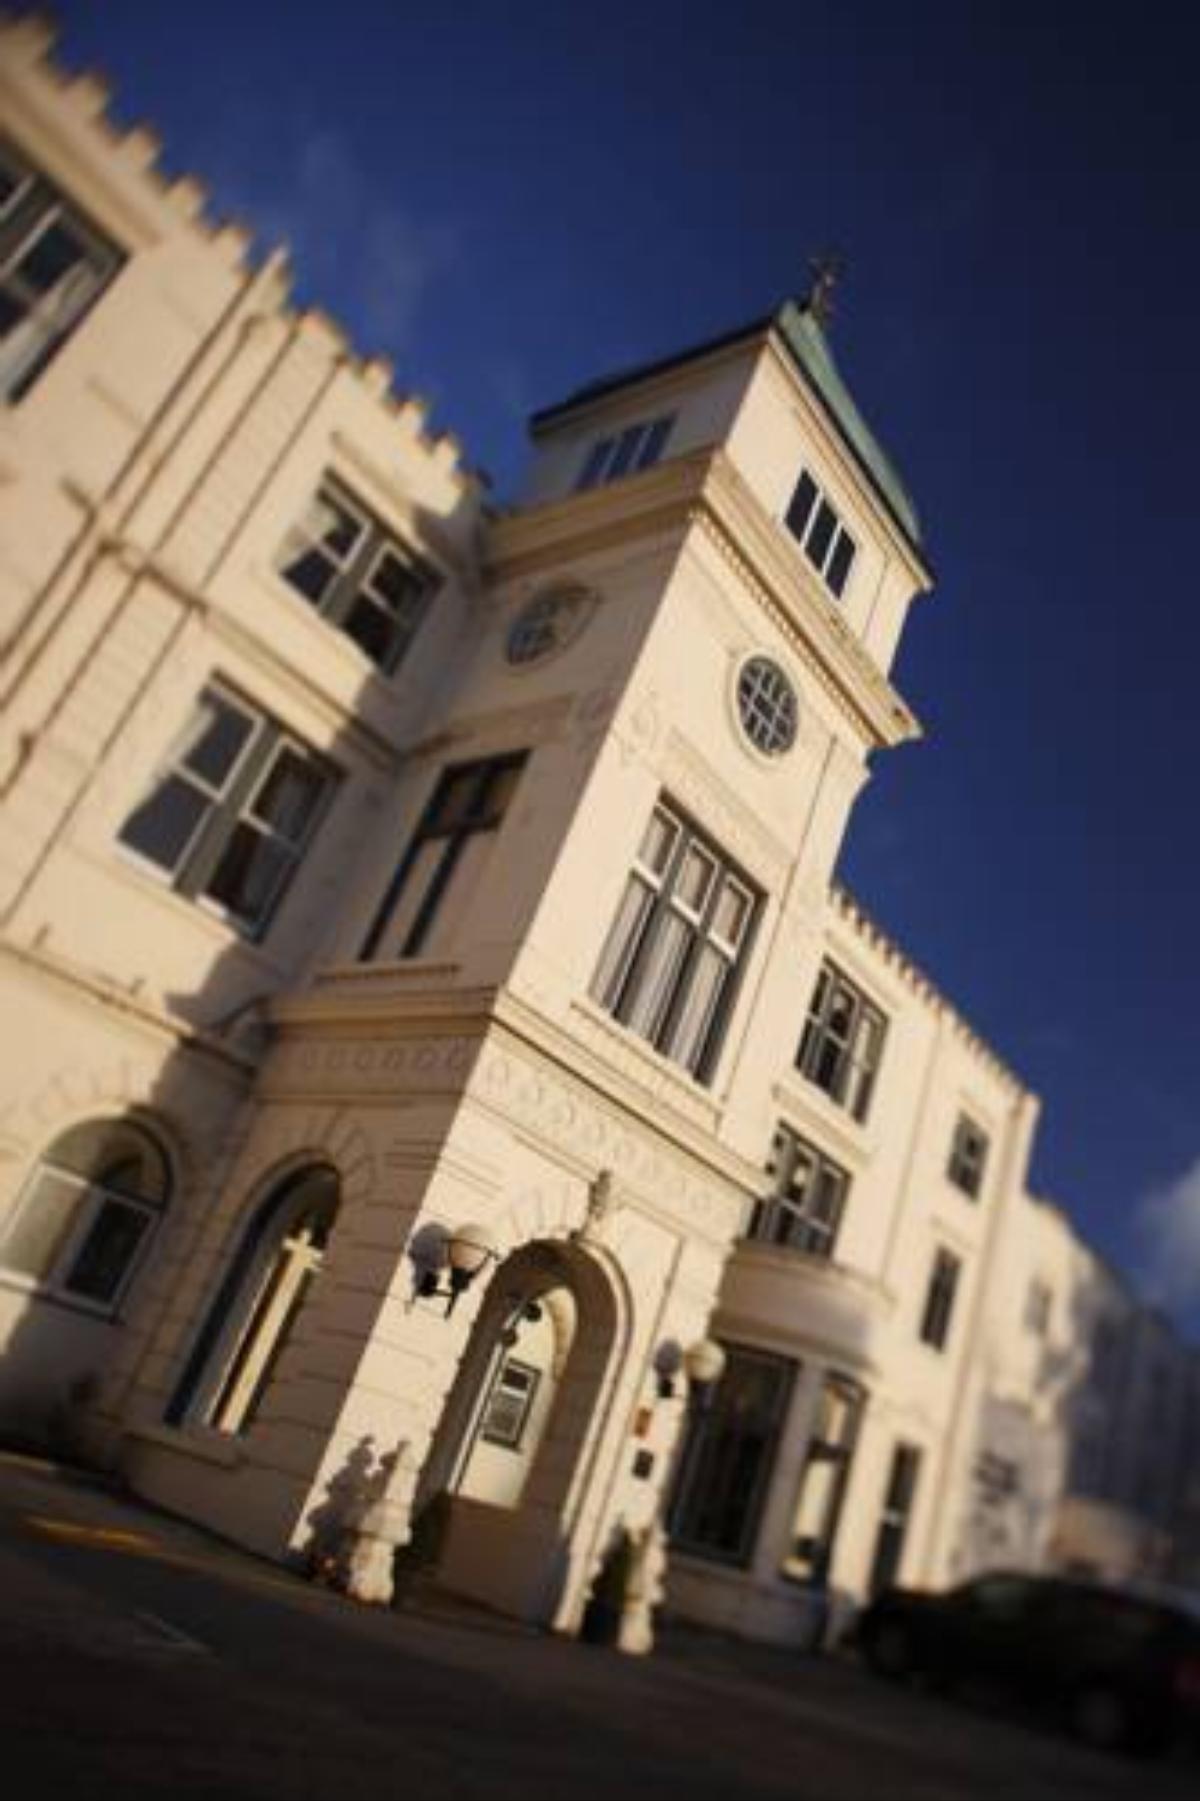 The Botleigh Grange Hotel Hotel Southampton United Kingdom